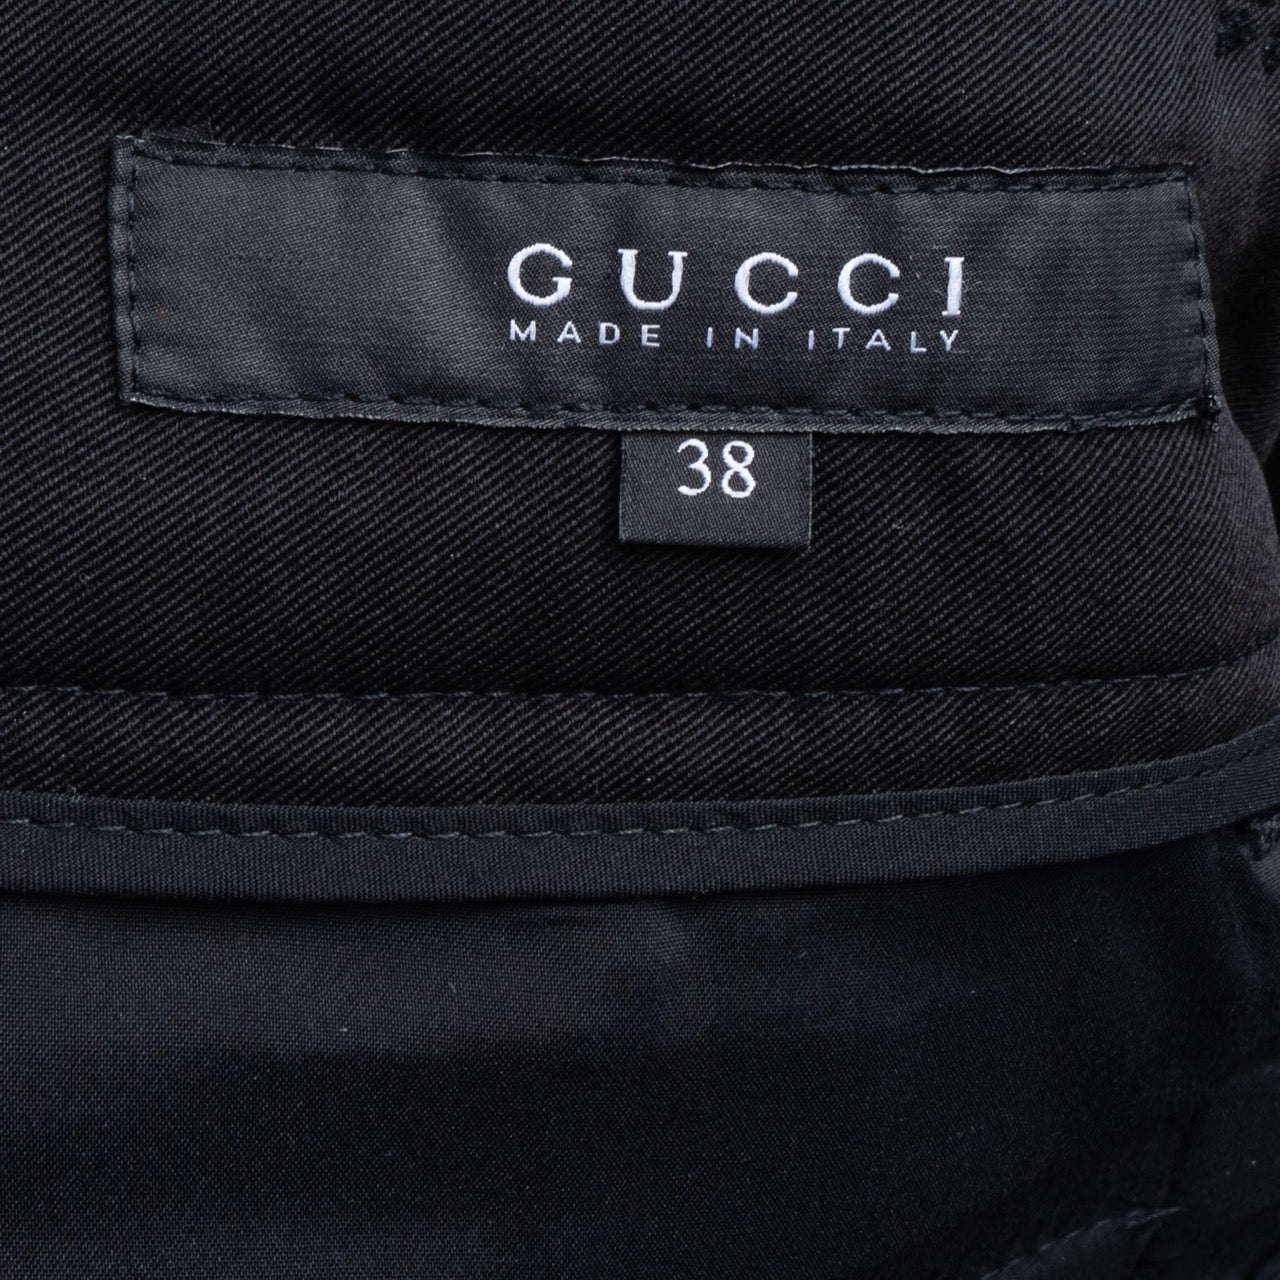 Gucci Black Wool Pants (38)